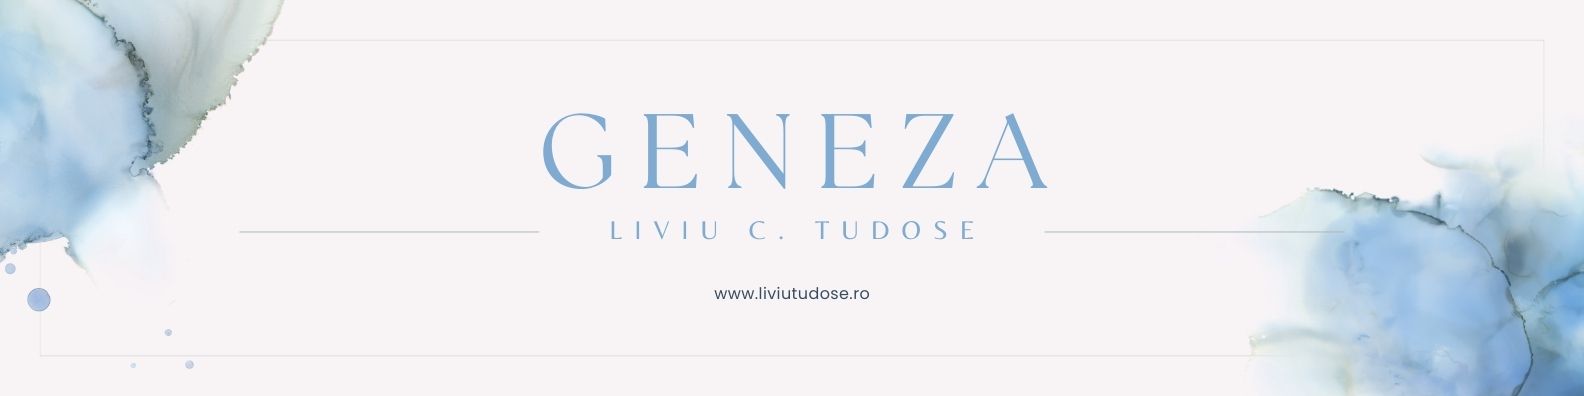 Geneza - Liviu C. Tudose - www.liviutudose.ro